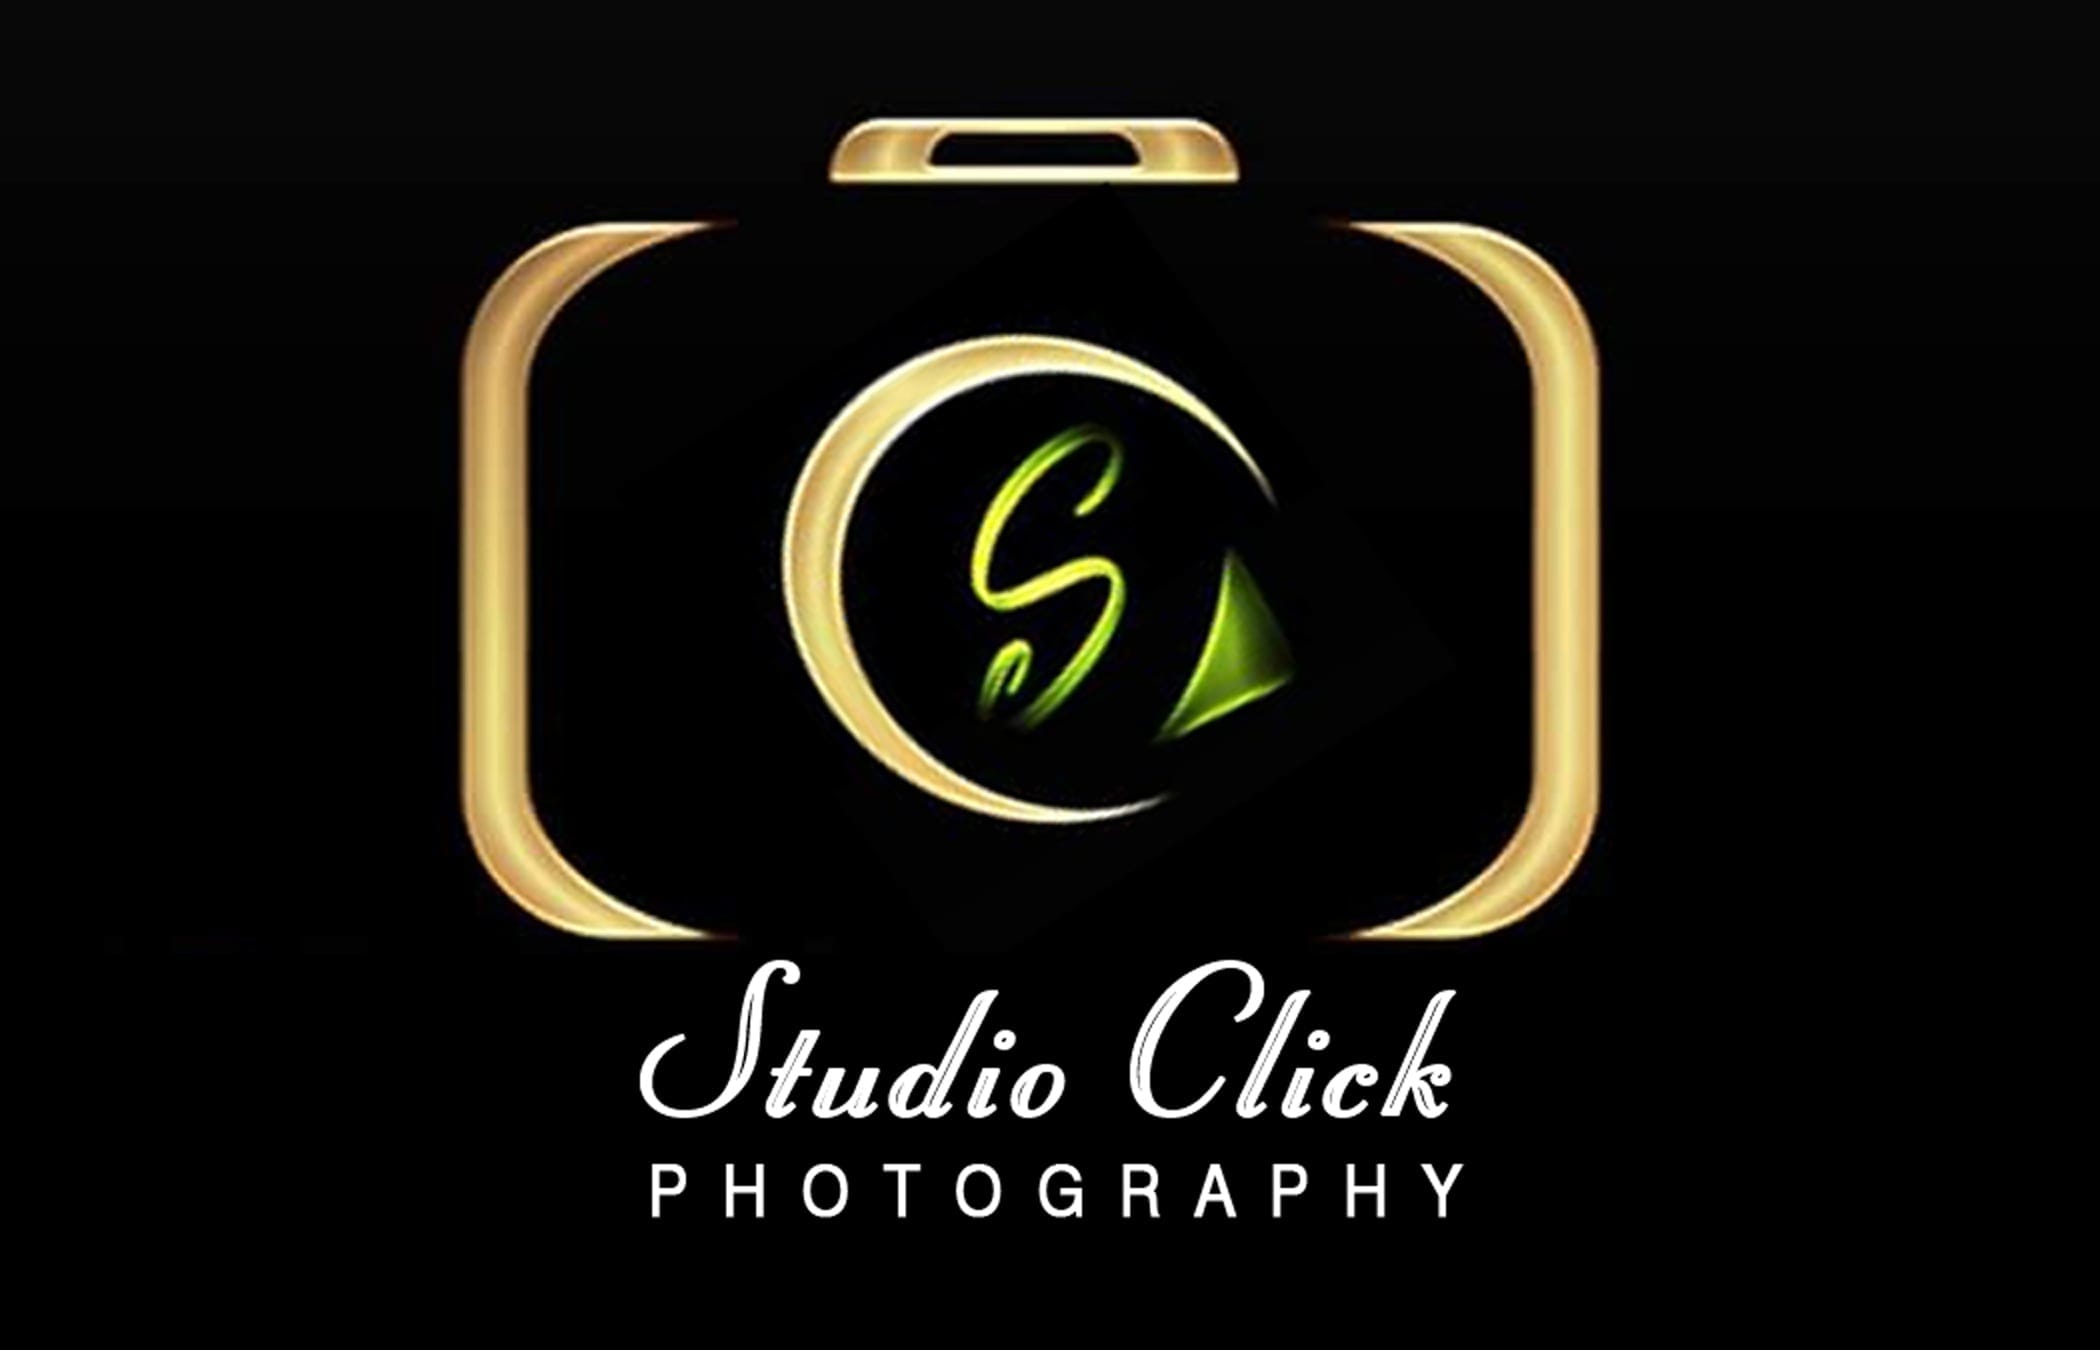 Studio Click Photography